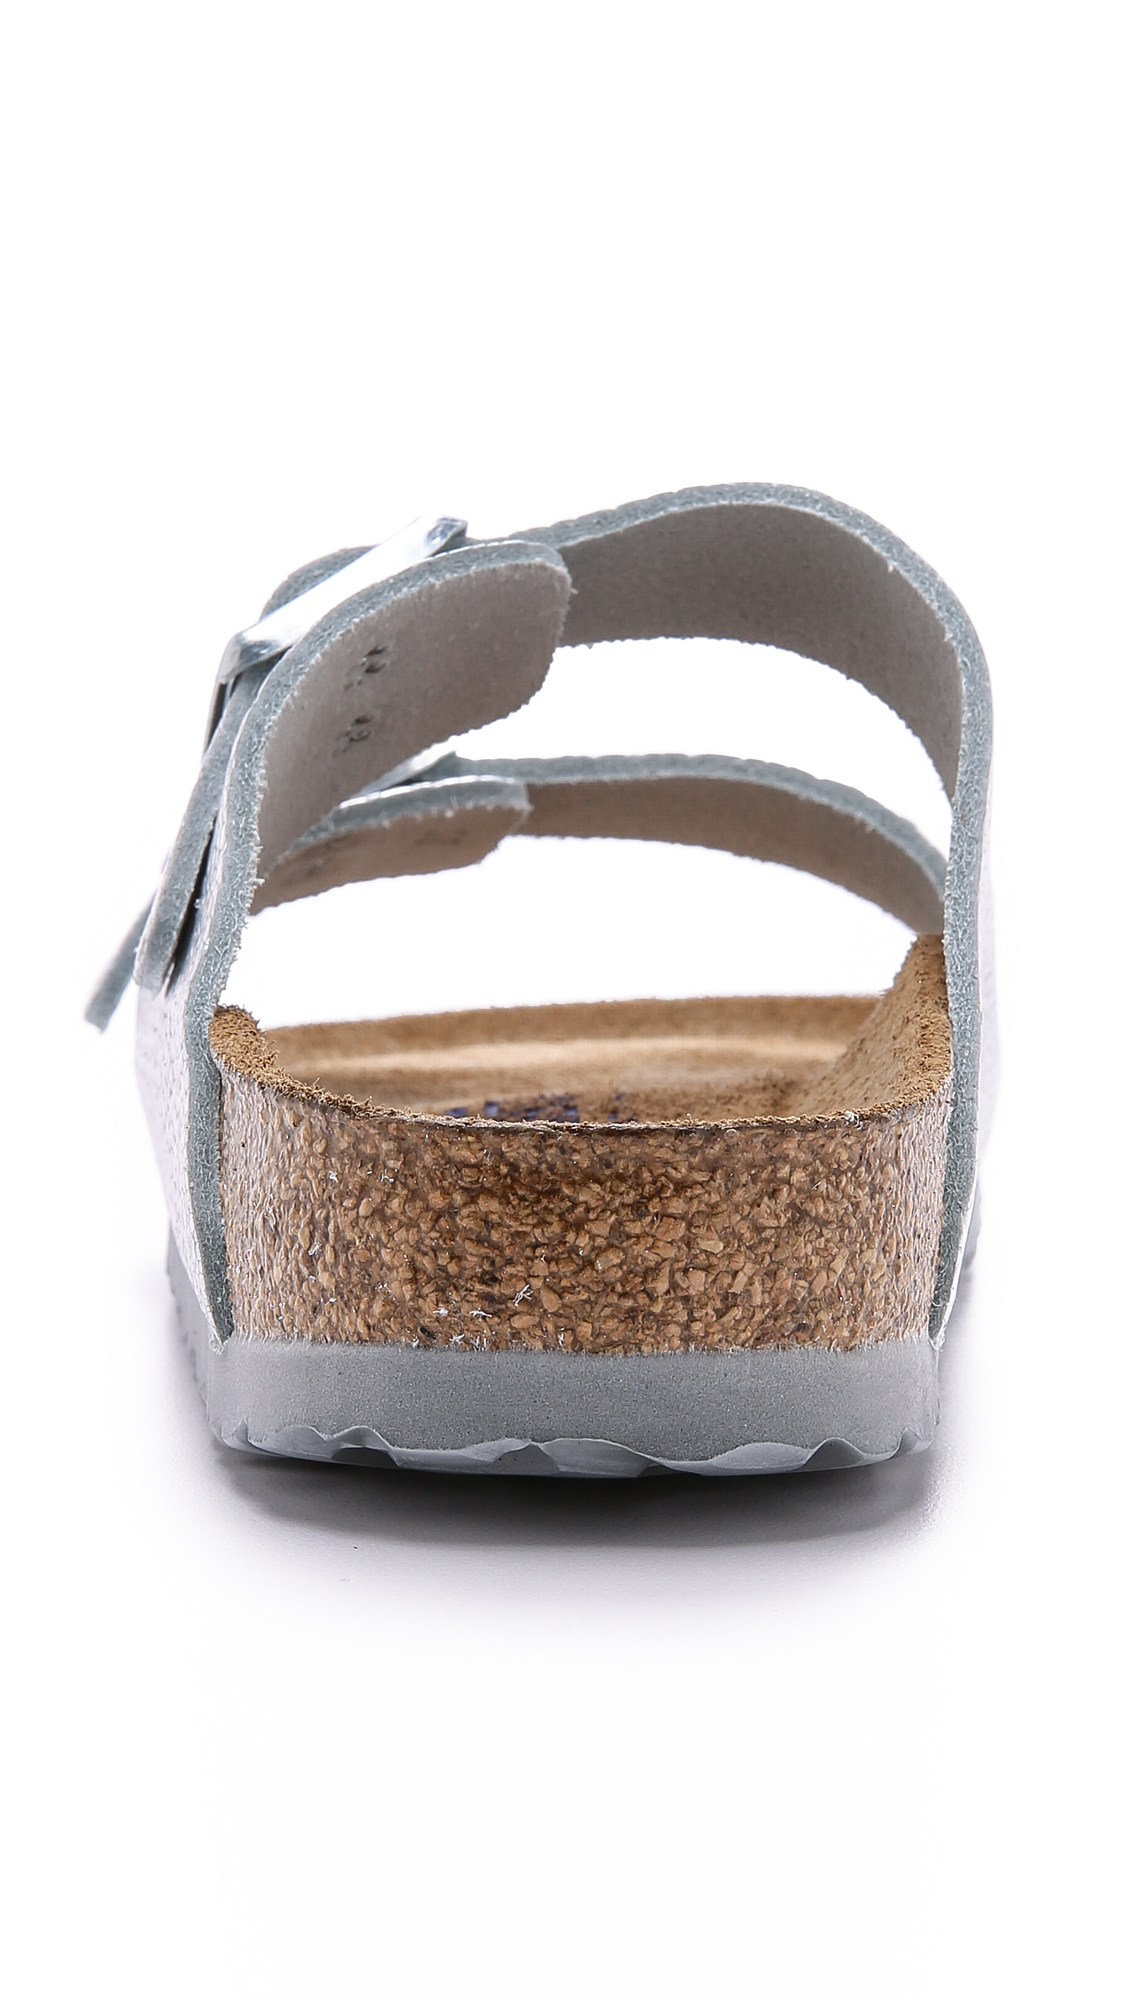 Birkenstock Arizona Two Band Sfb Sandals - Pebbles Metallic Silver | Lyst